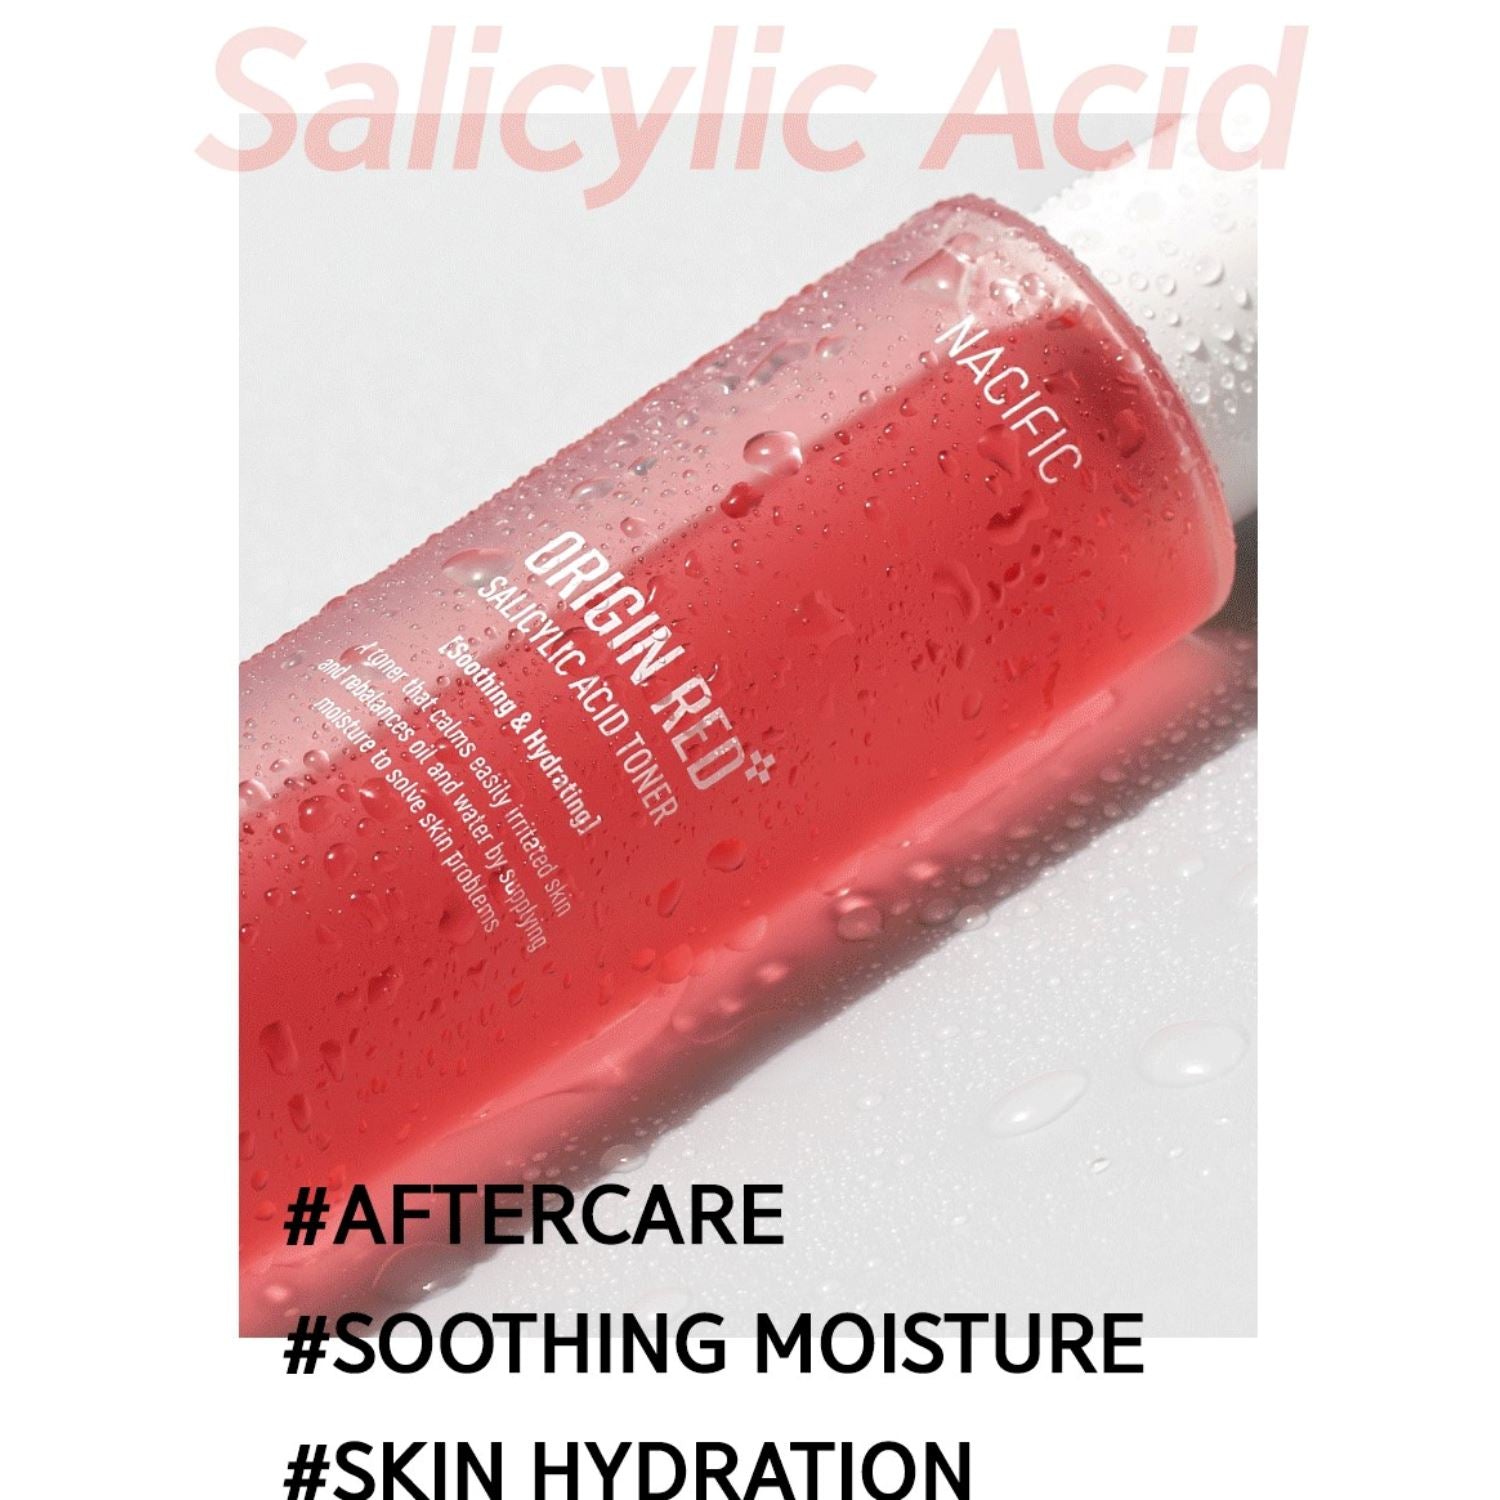 Nacific Origin Red Salicylic Acid Toner 150ml Skin Care Nacific ORION XO Sri Lanka